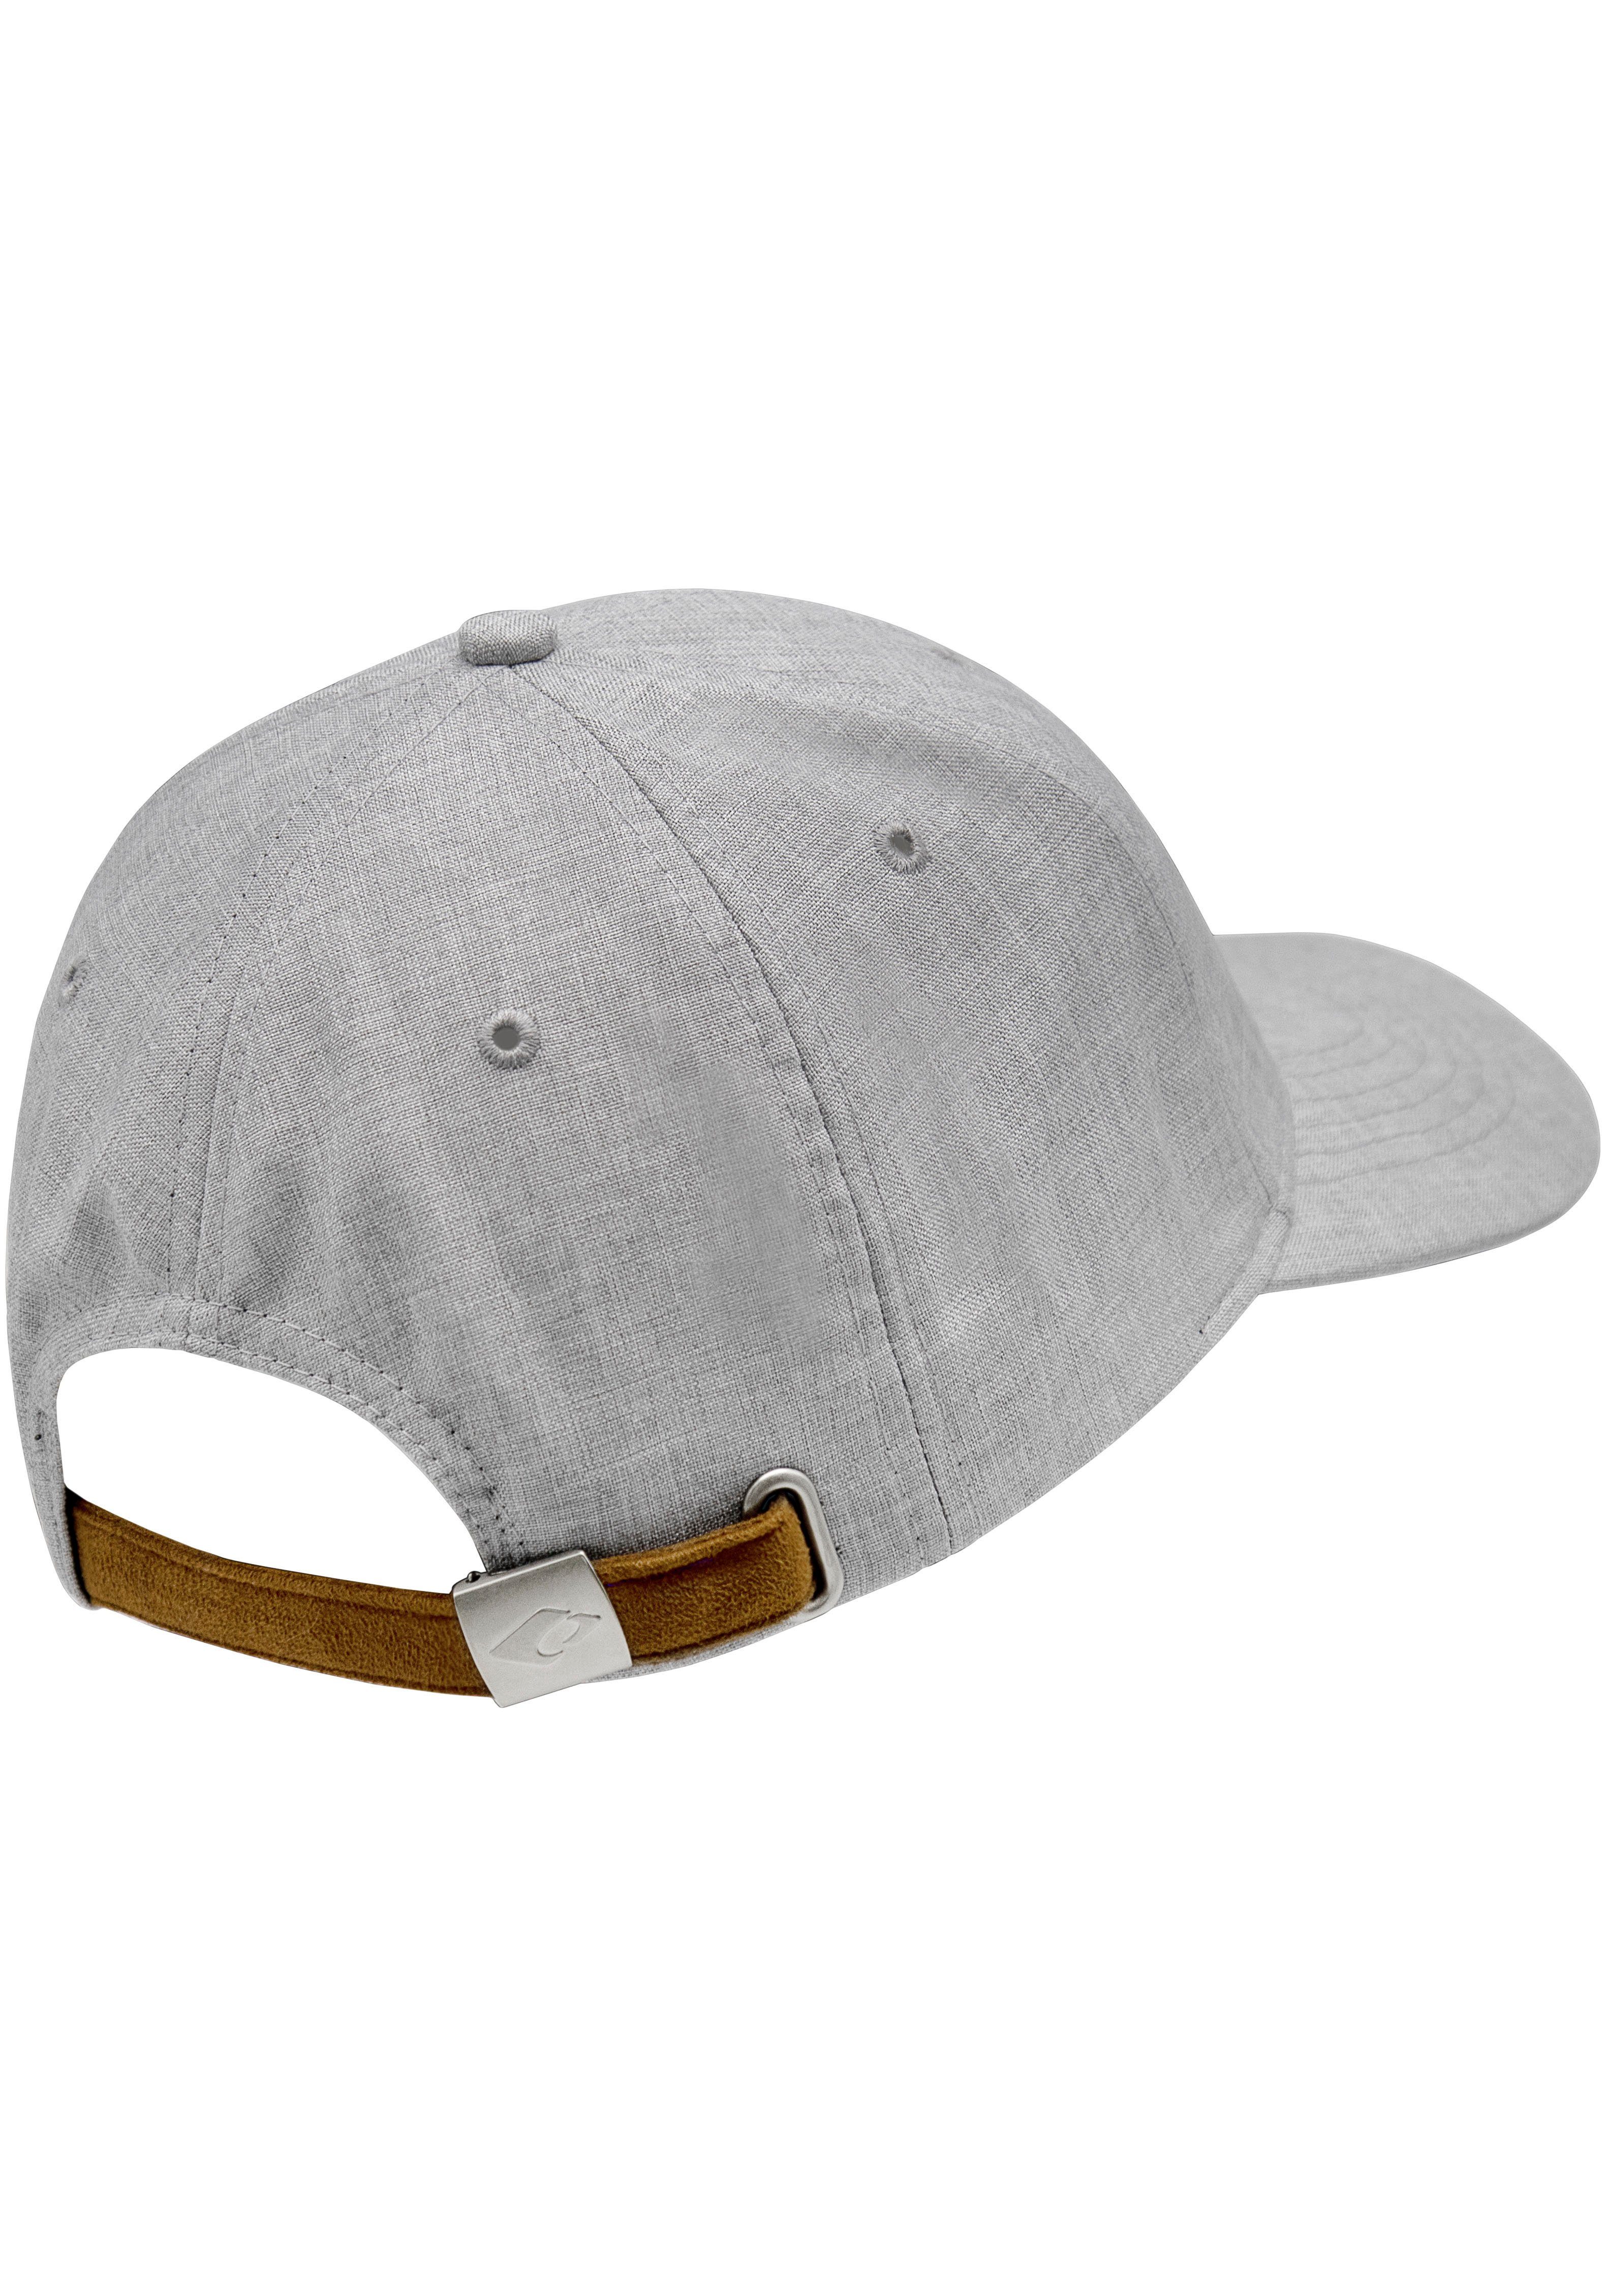 hellgrau melierter in Optik, chillouts Size, verstellbar Baseball Cap One Amadora Hat